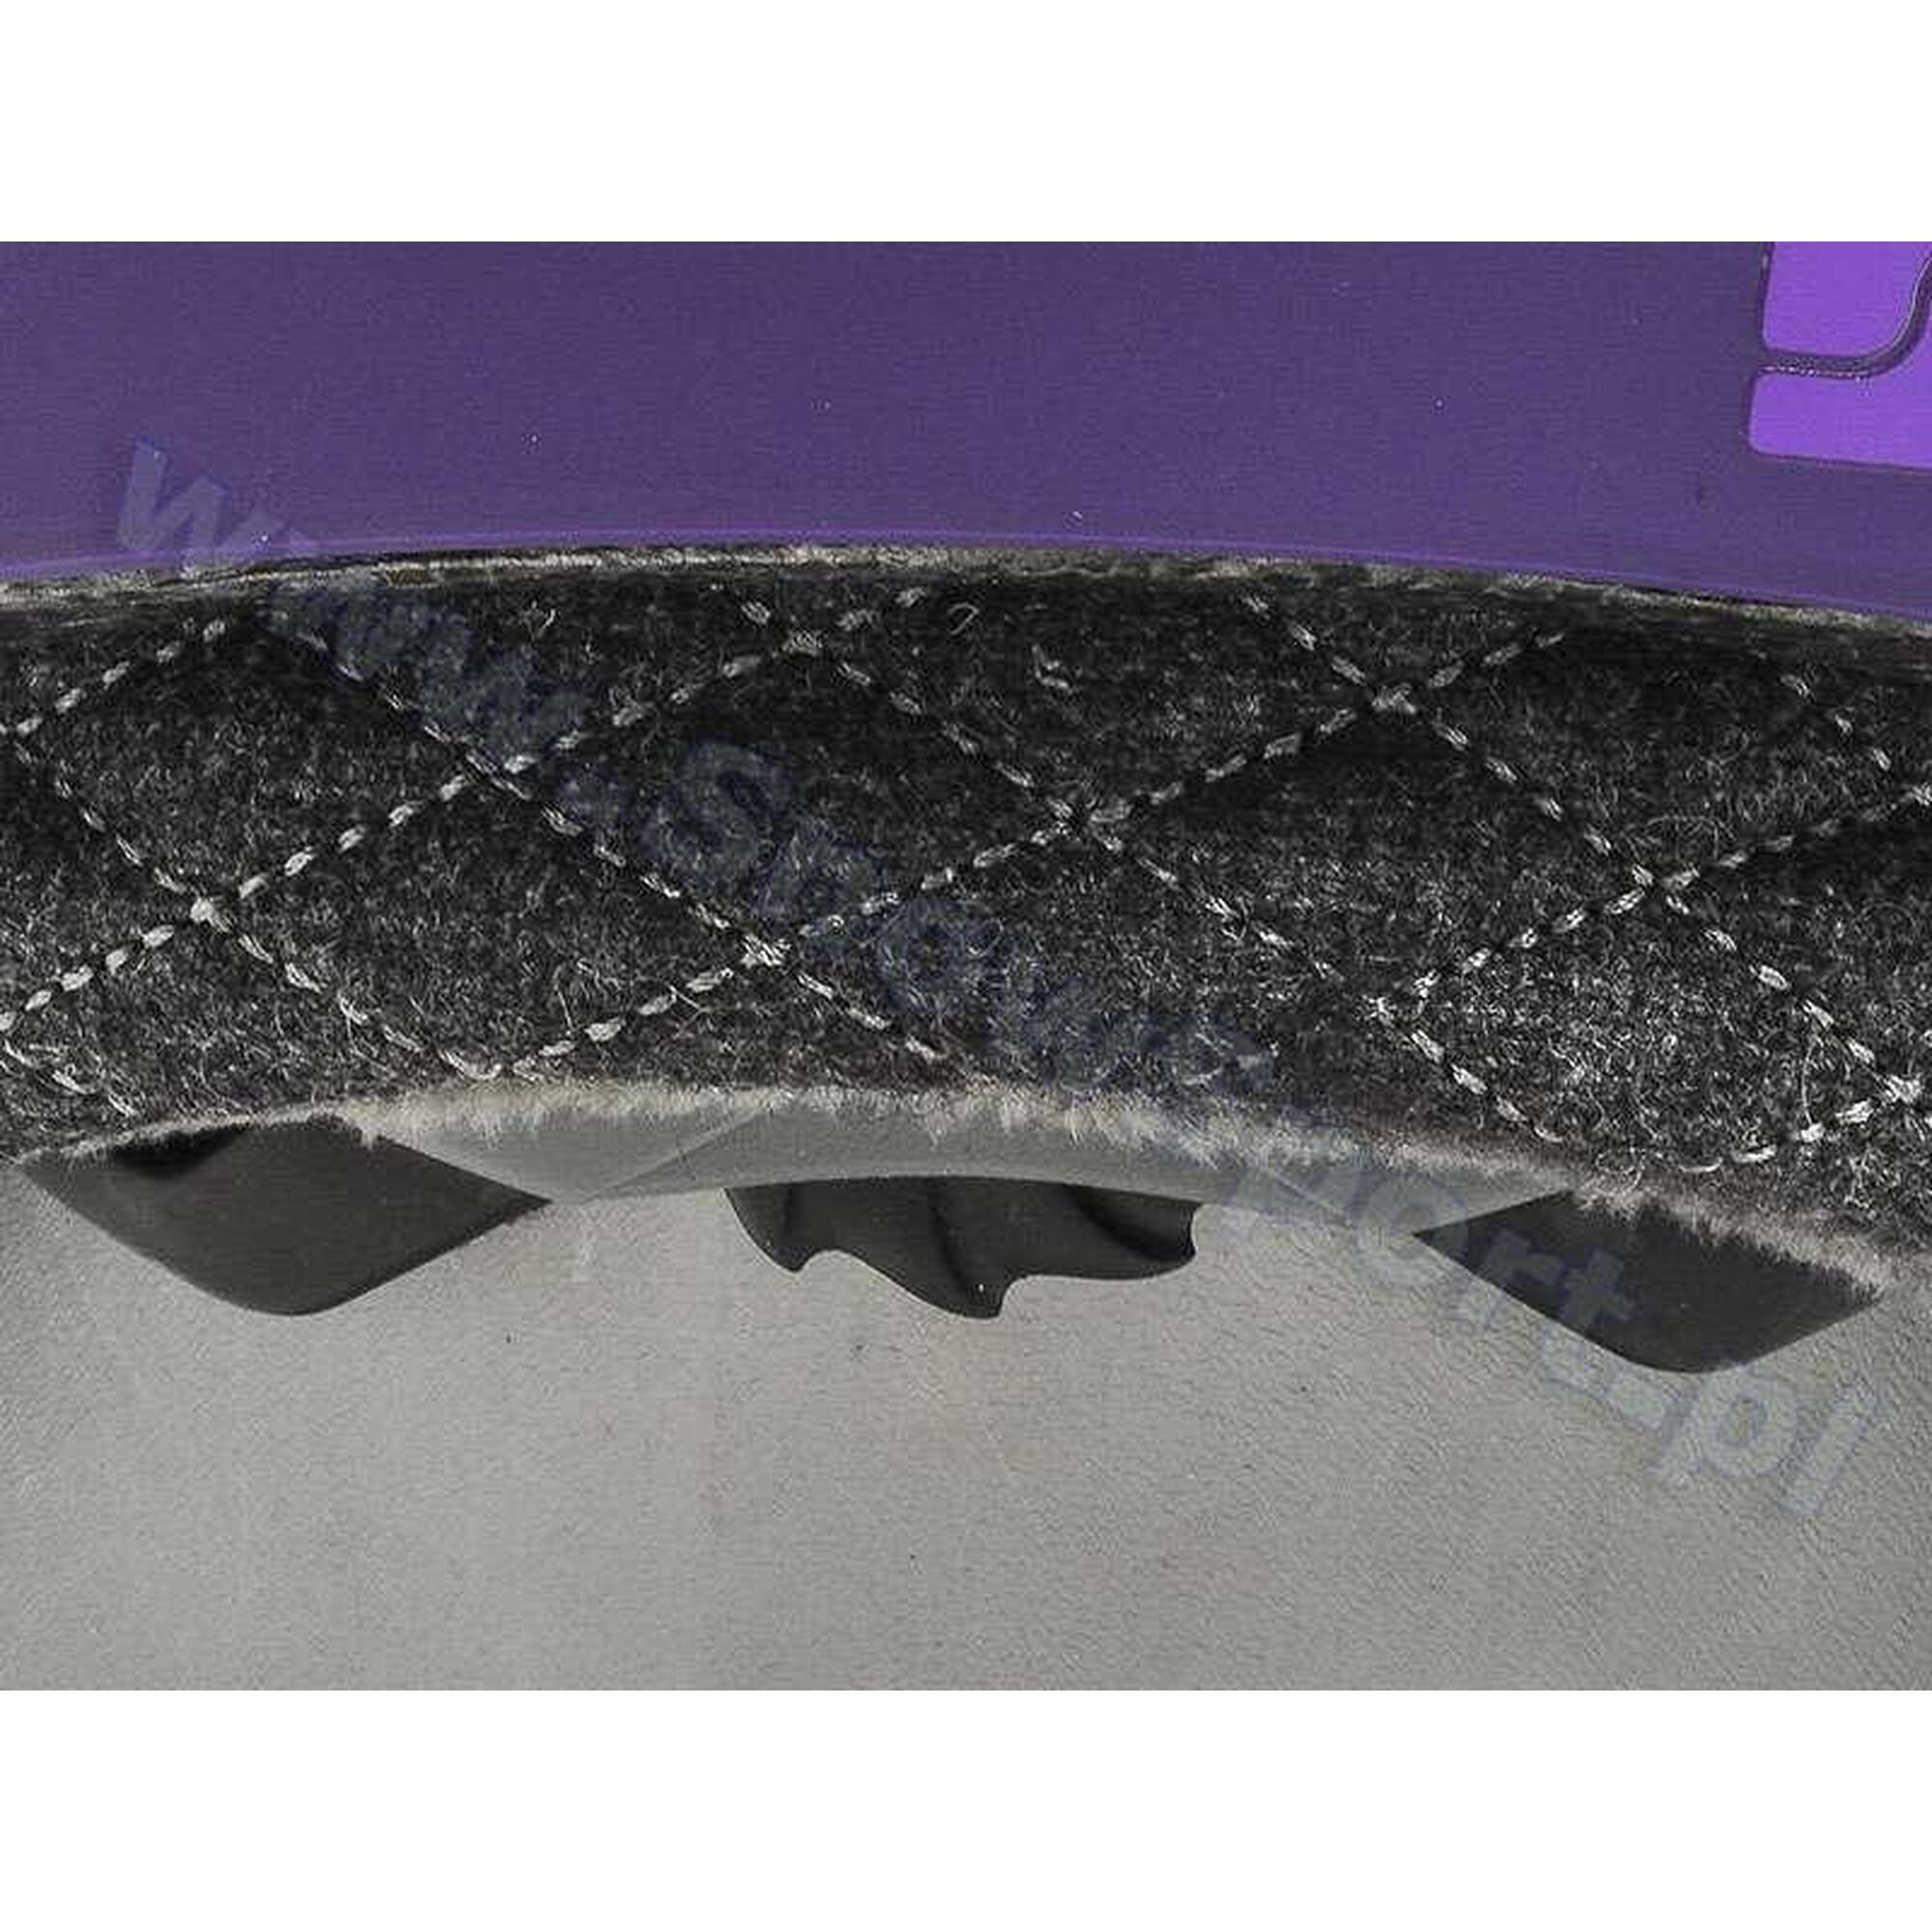 Kask Narciarski Unisex Giro Surface S Matte Purple 2016